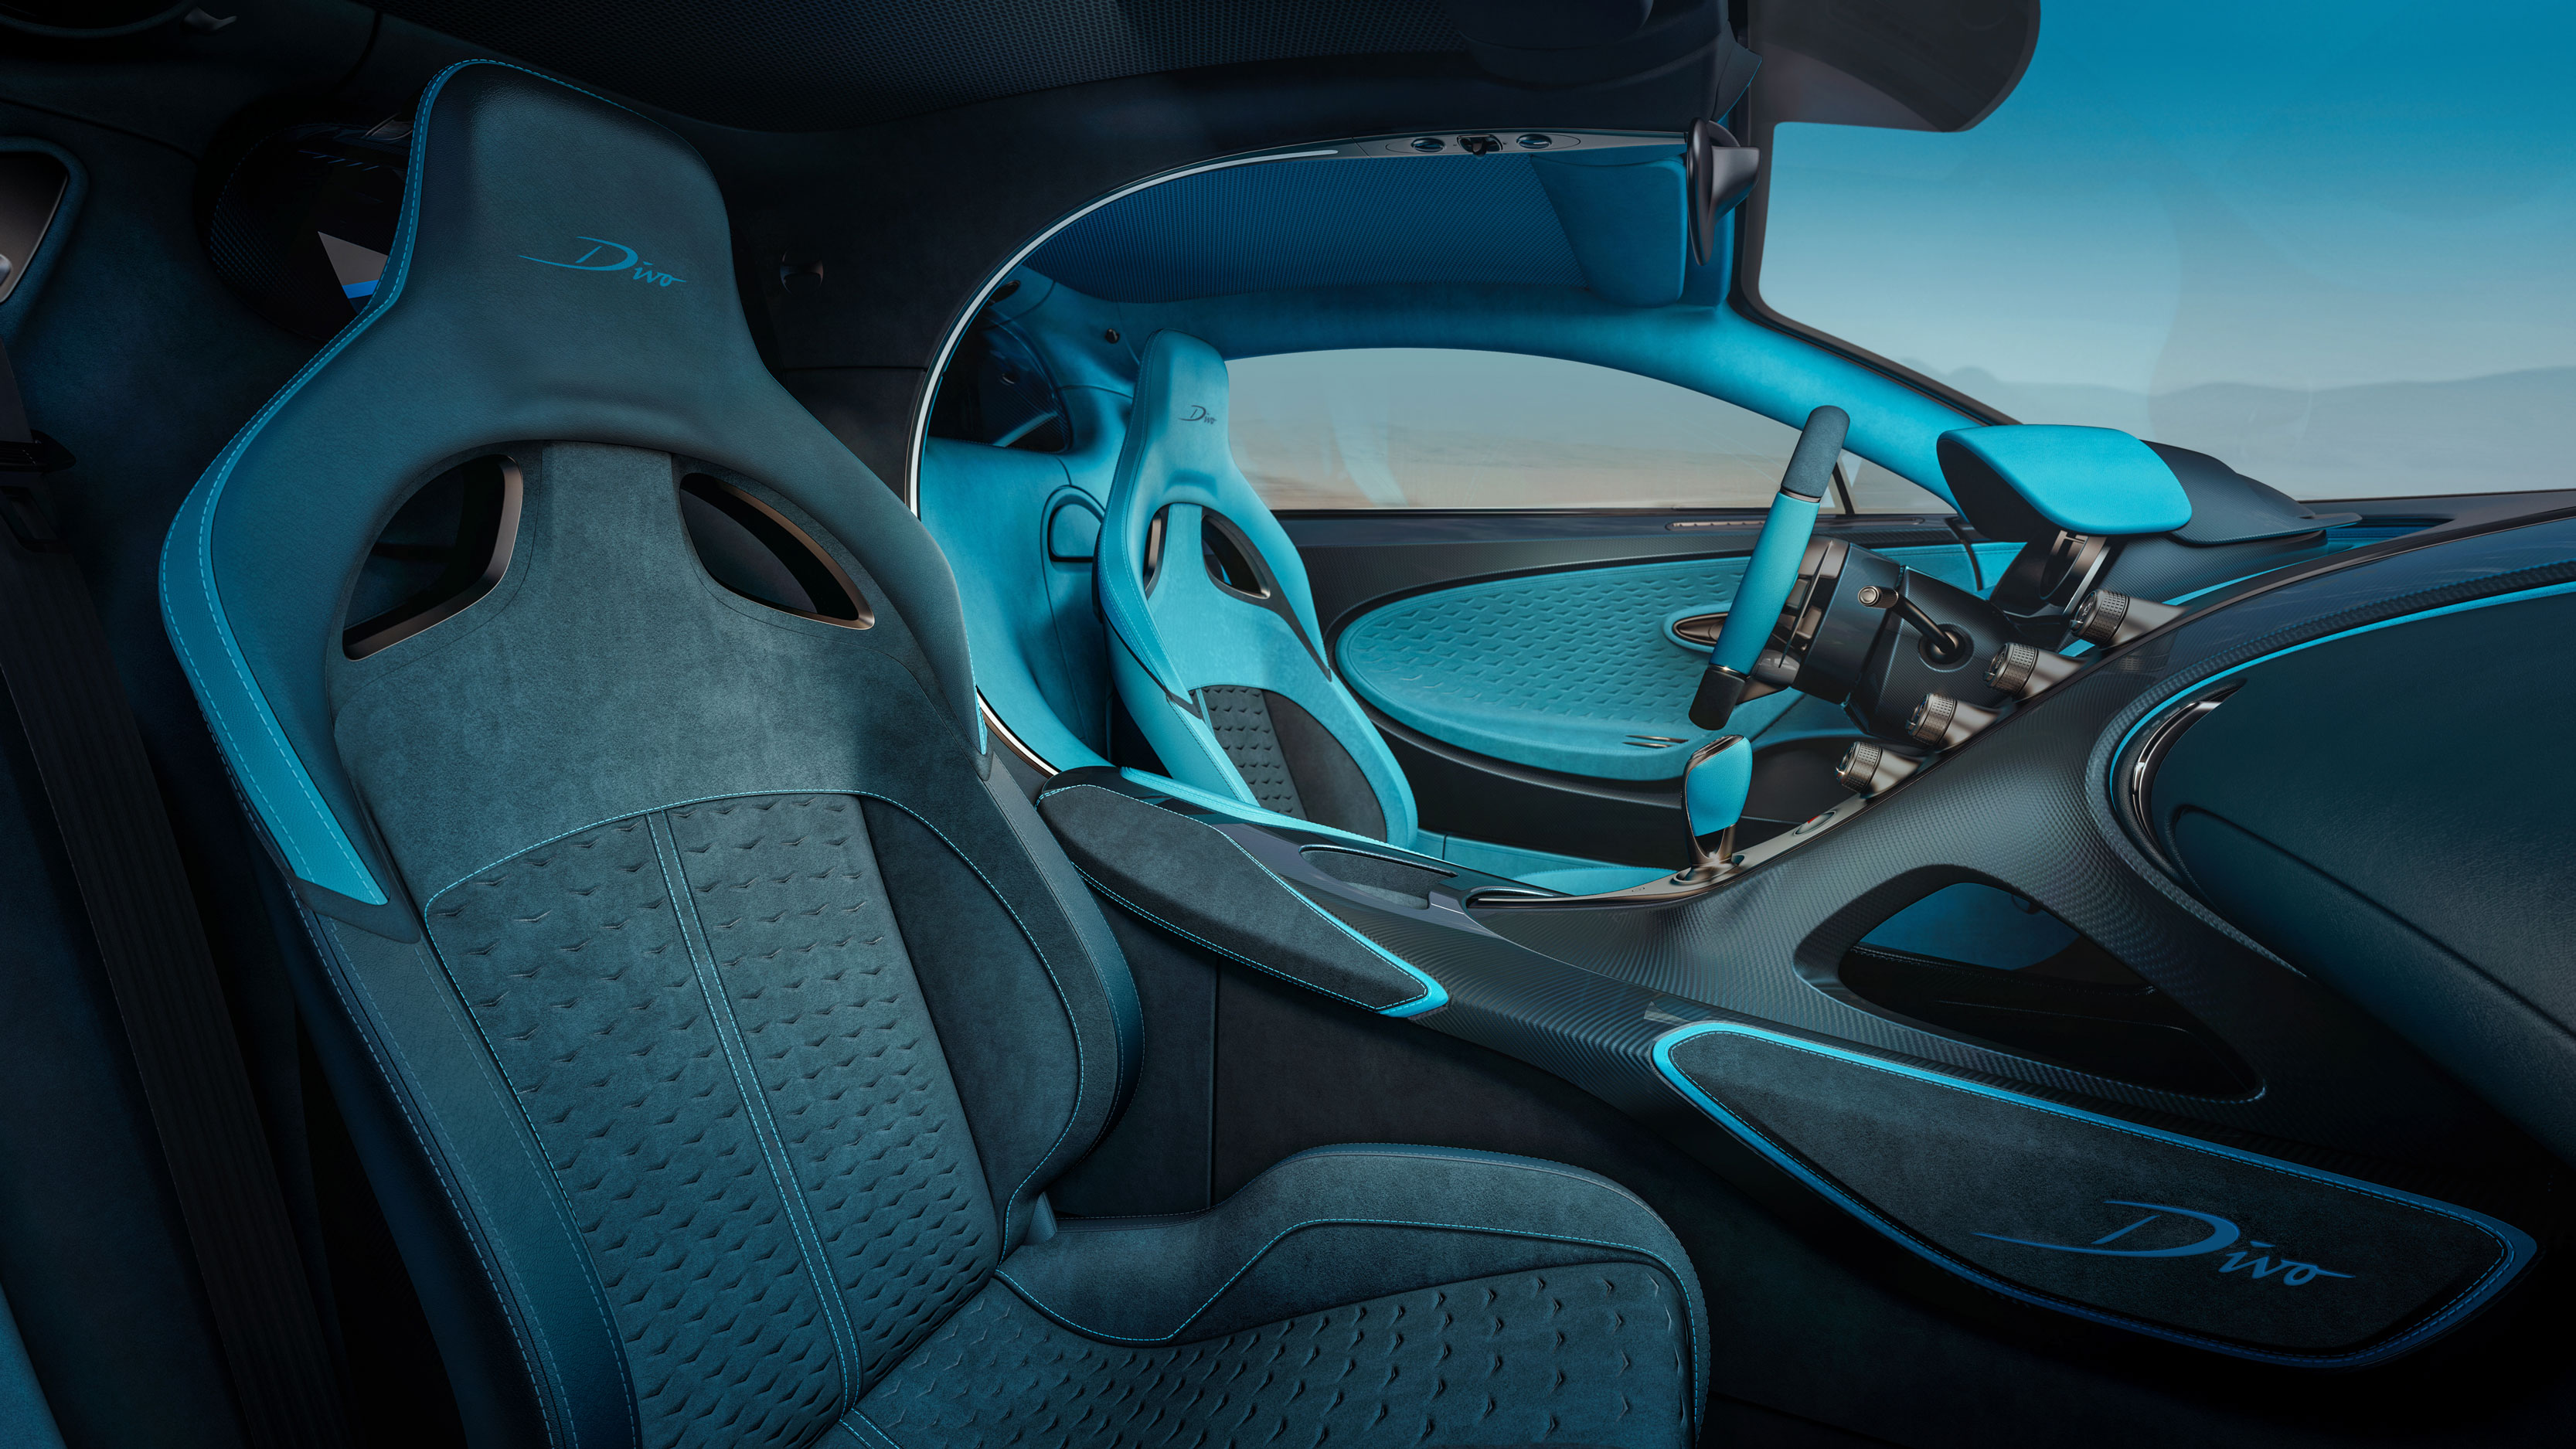 Bugatti's new £4.5 million hypercar. The Divo